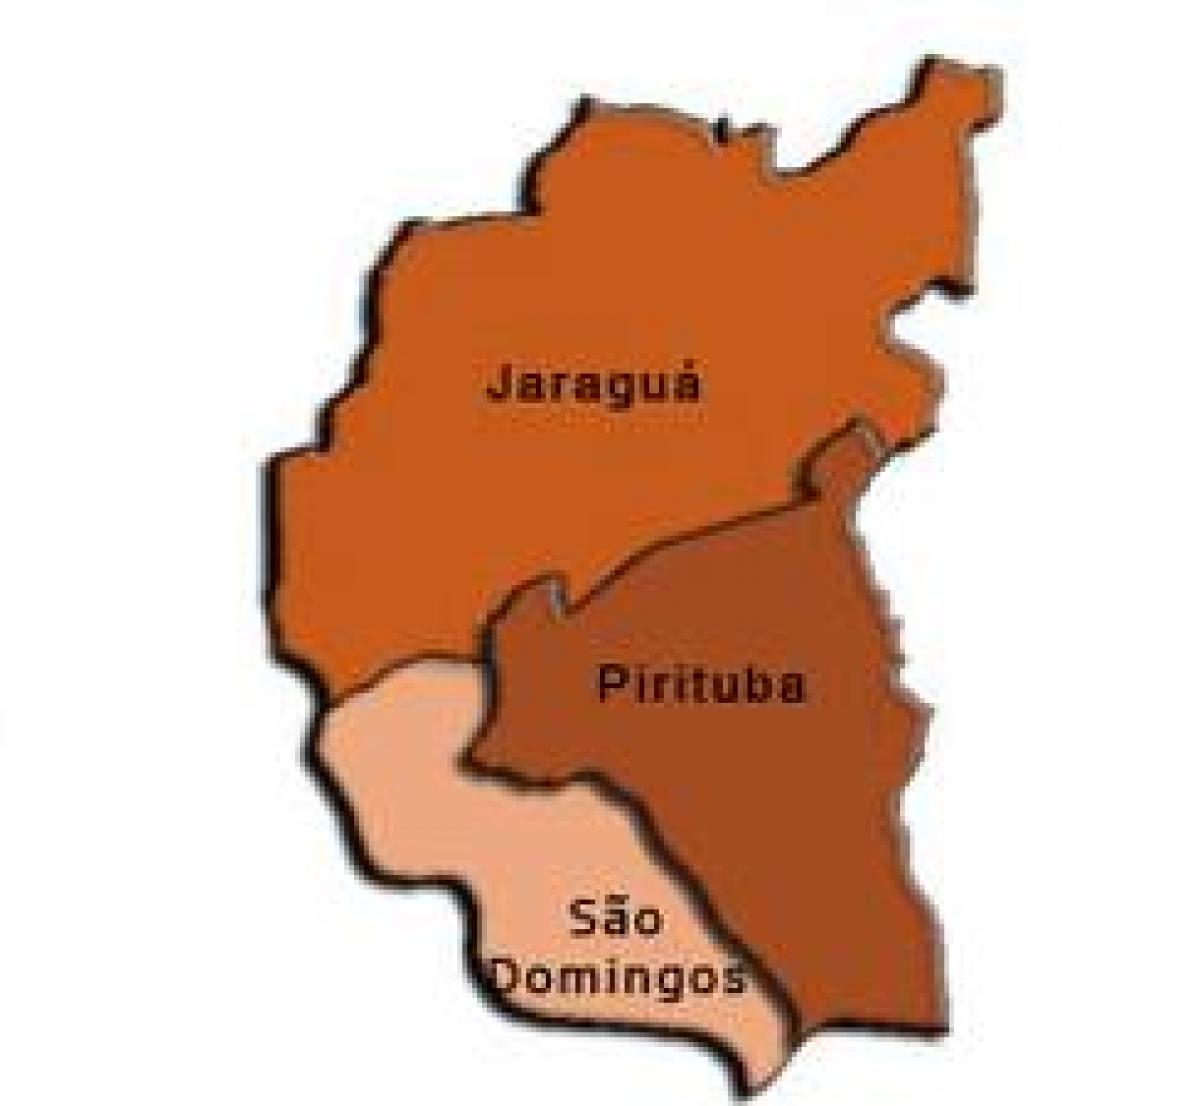 Harta Pirituba-Jaraguá sub-prefectura